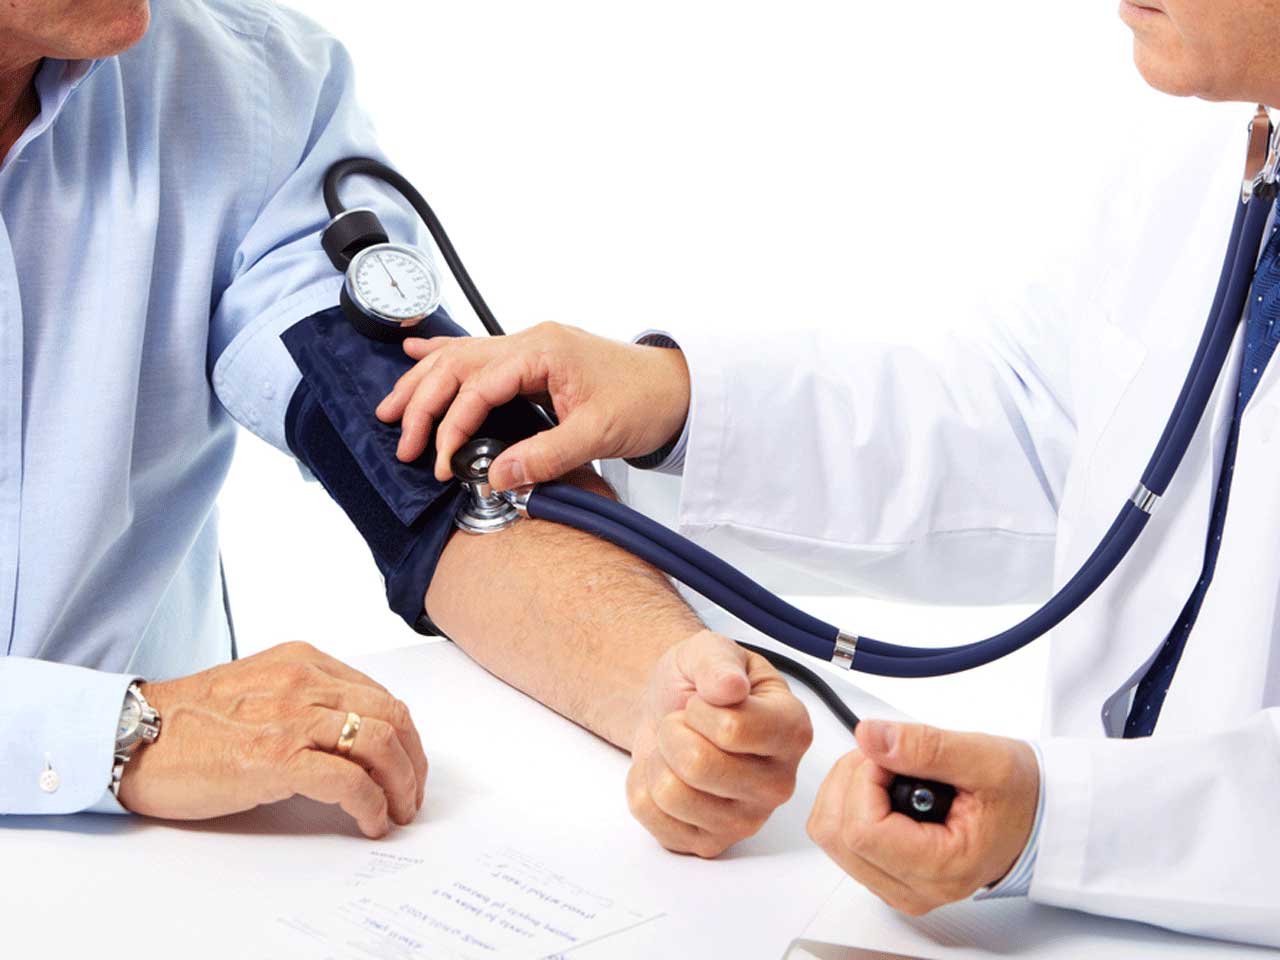 Blood pressure test - Healthily